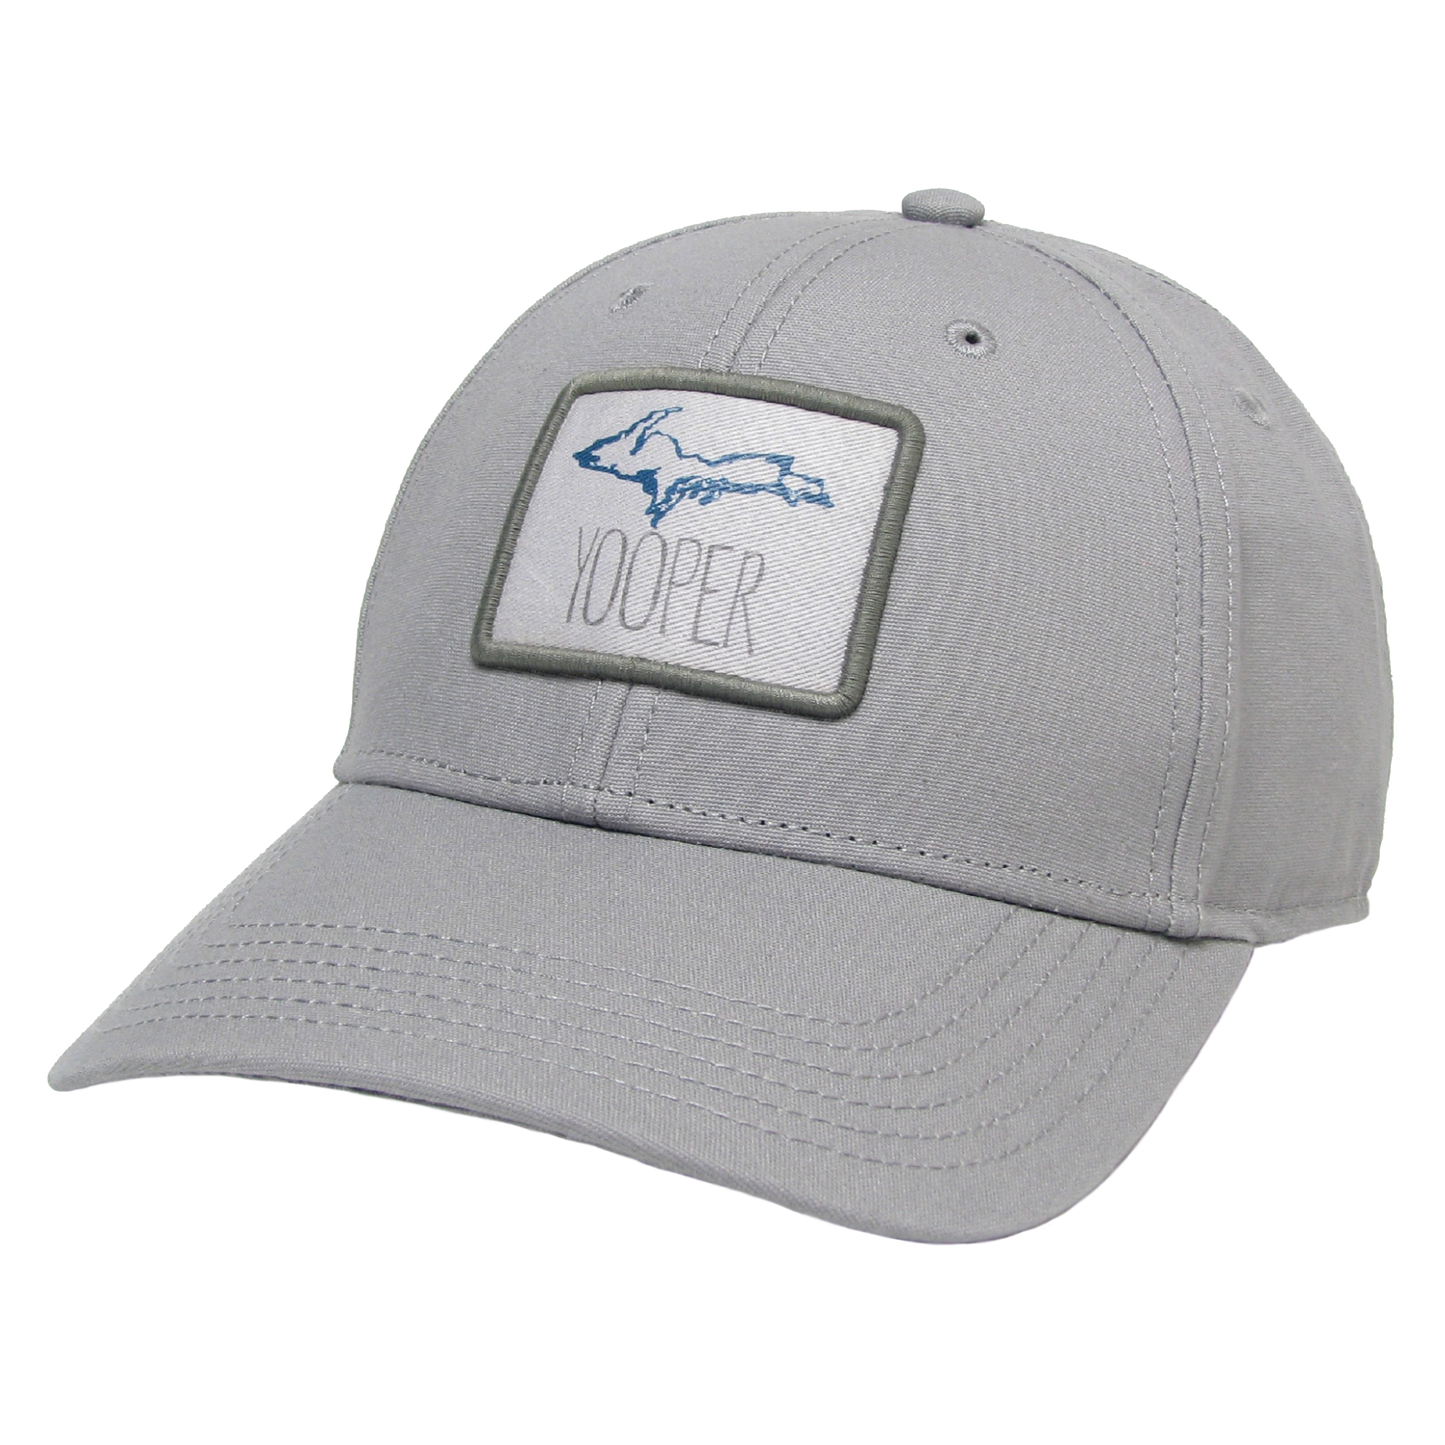 Yooper Mid-Pro Hat in Light Gray